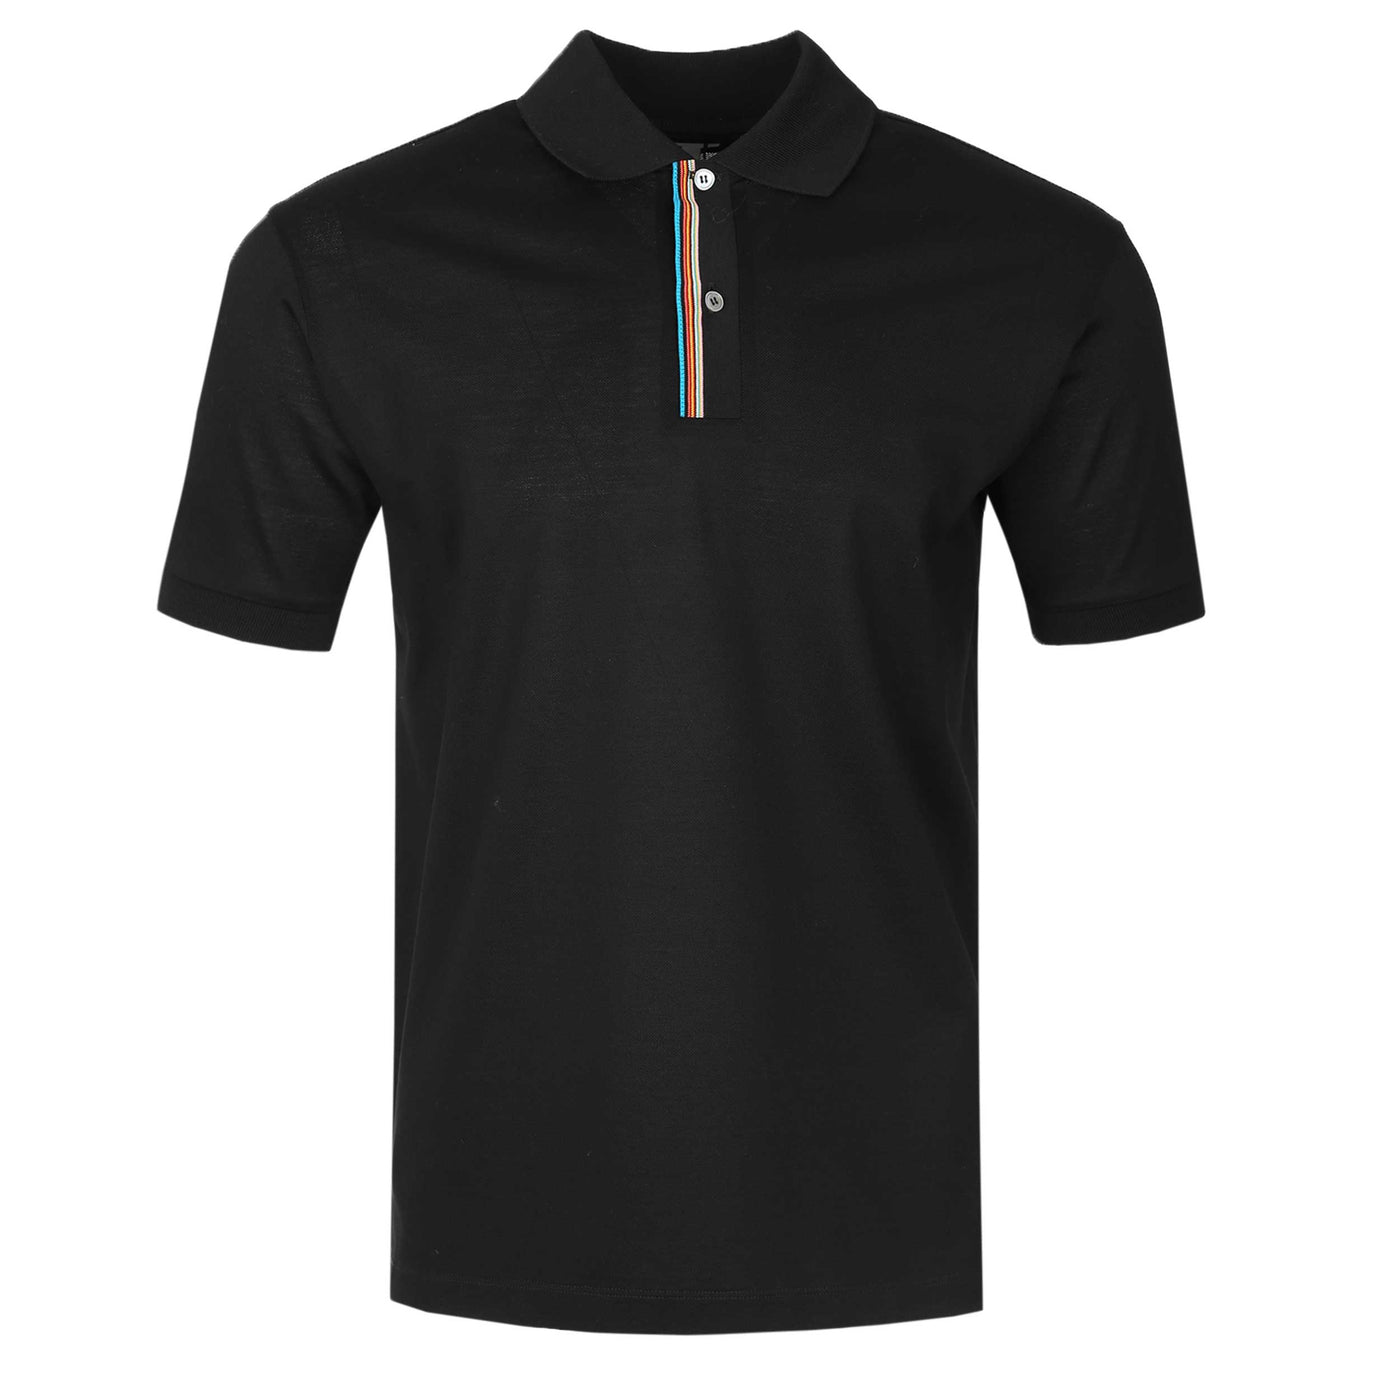 Paul Smith Stripe Placket Polo Shirt in Black